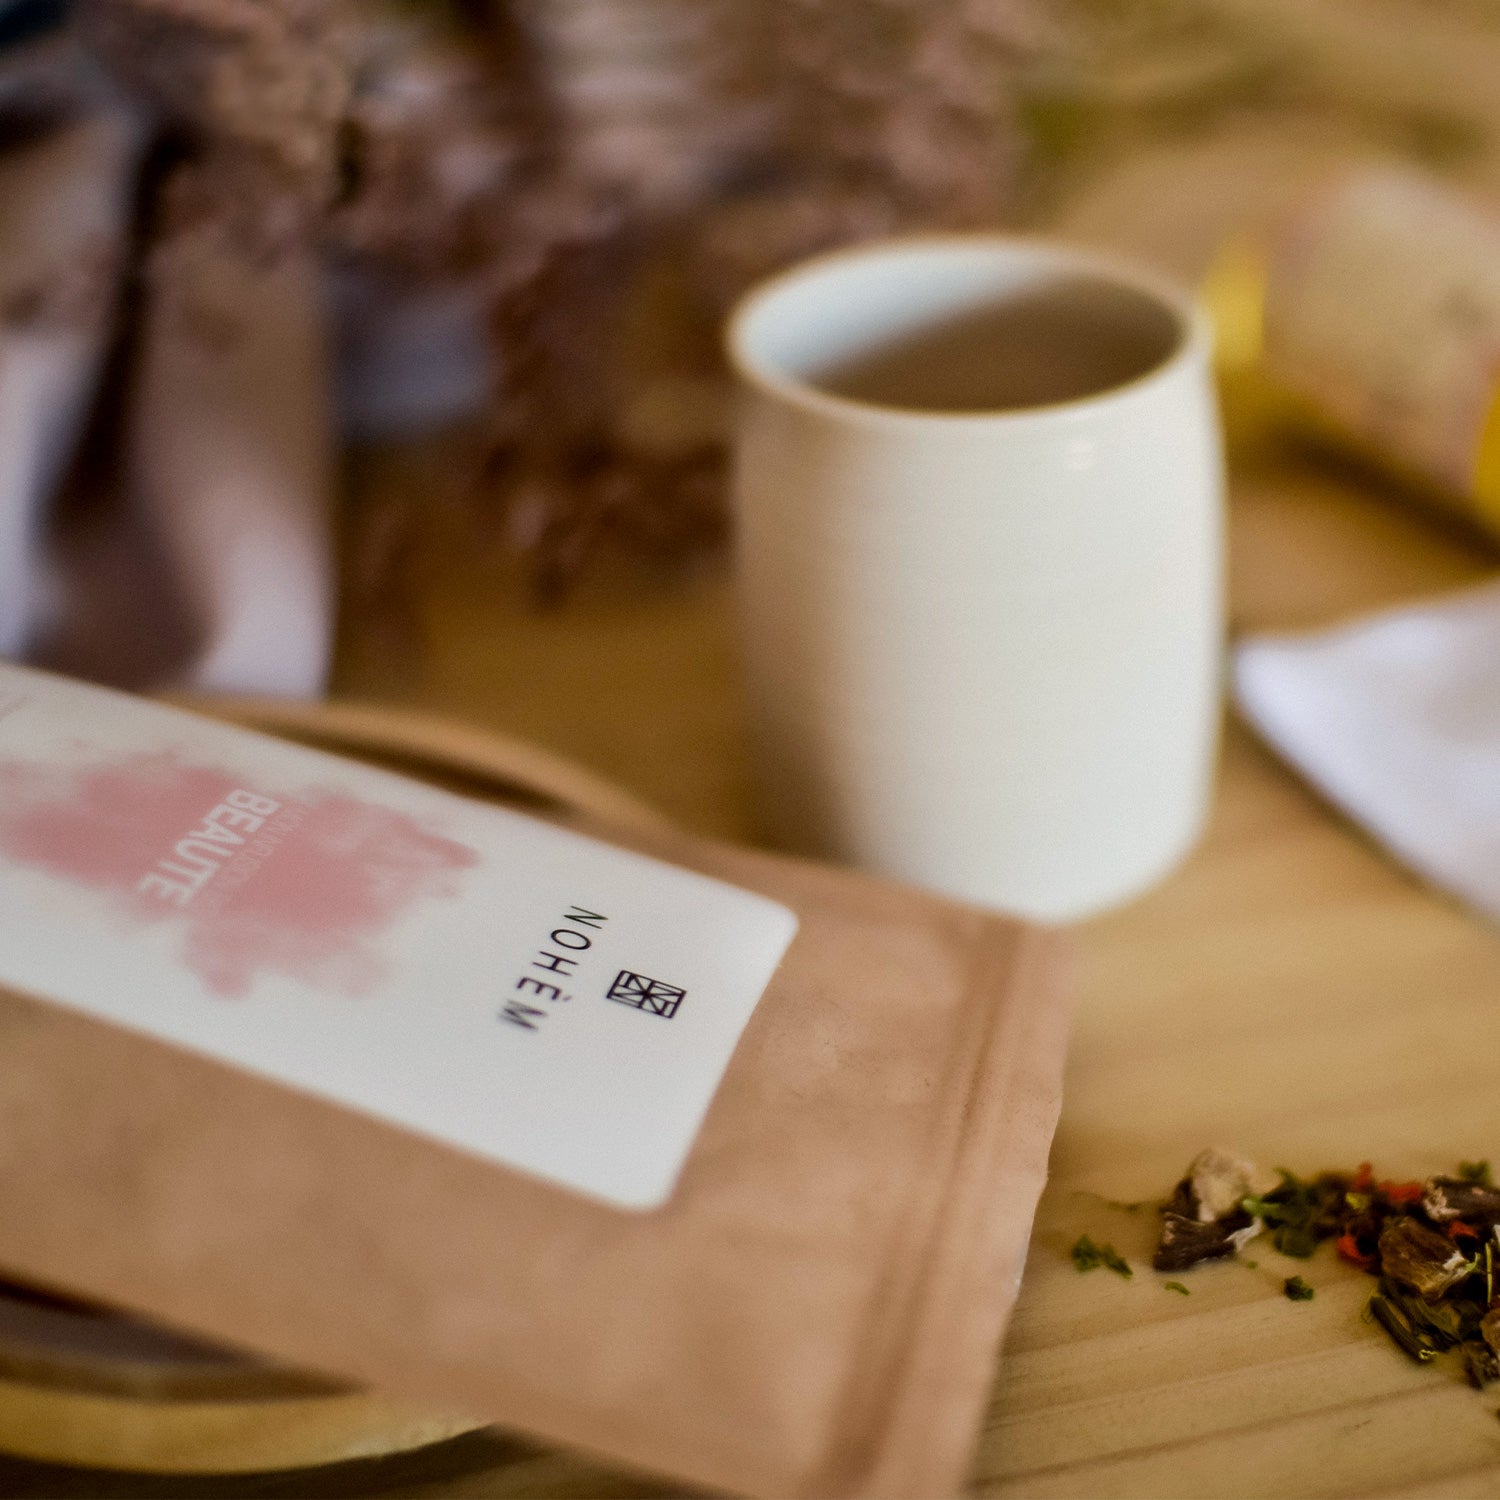 Hydration and beauty herbal tea